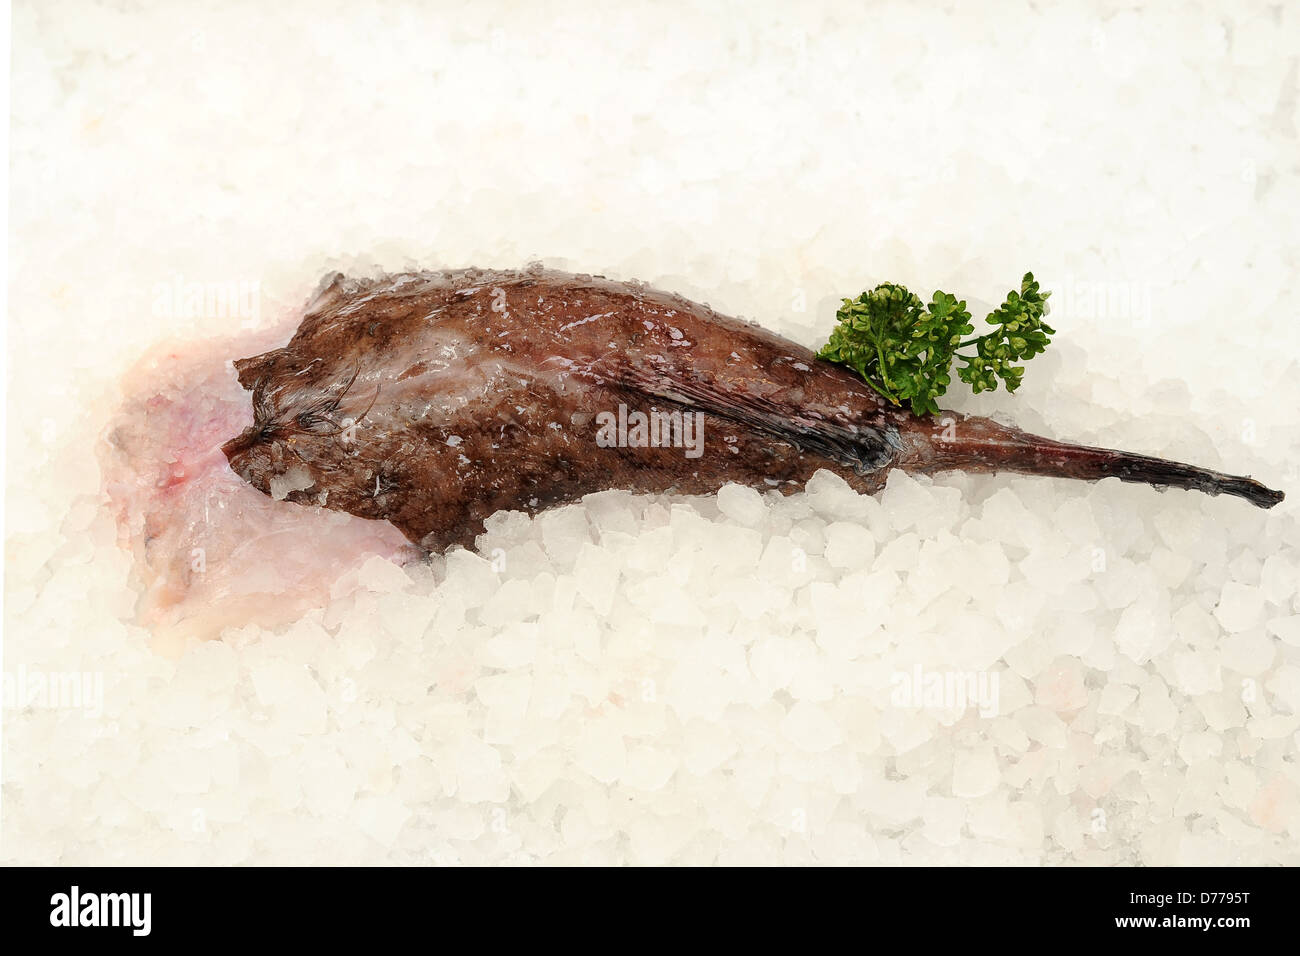 Monkfish tail. Stock Photo